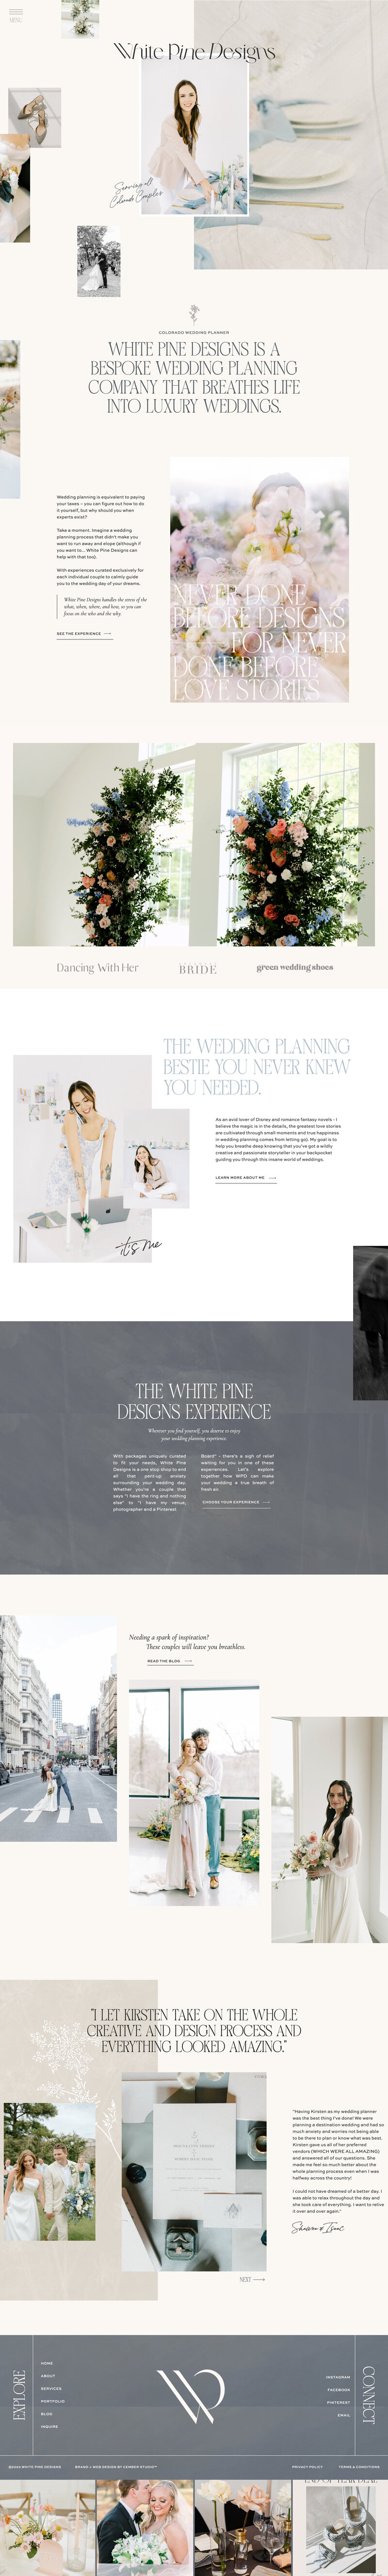 Showit website mockup for White Pine Designs wedding planner